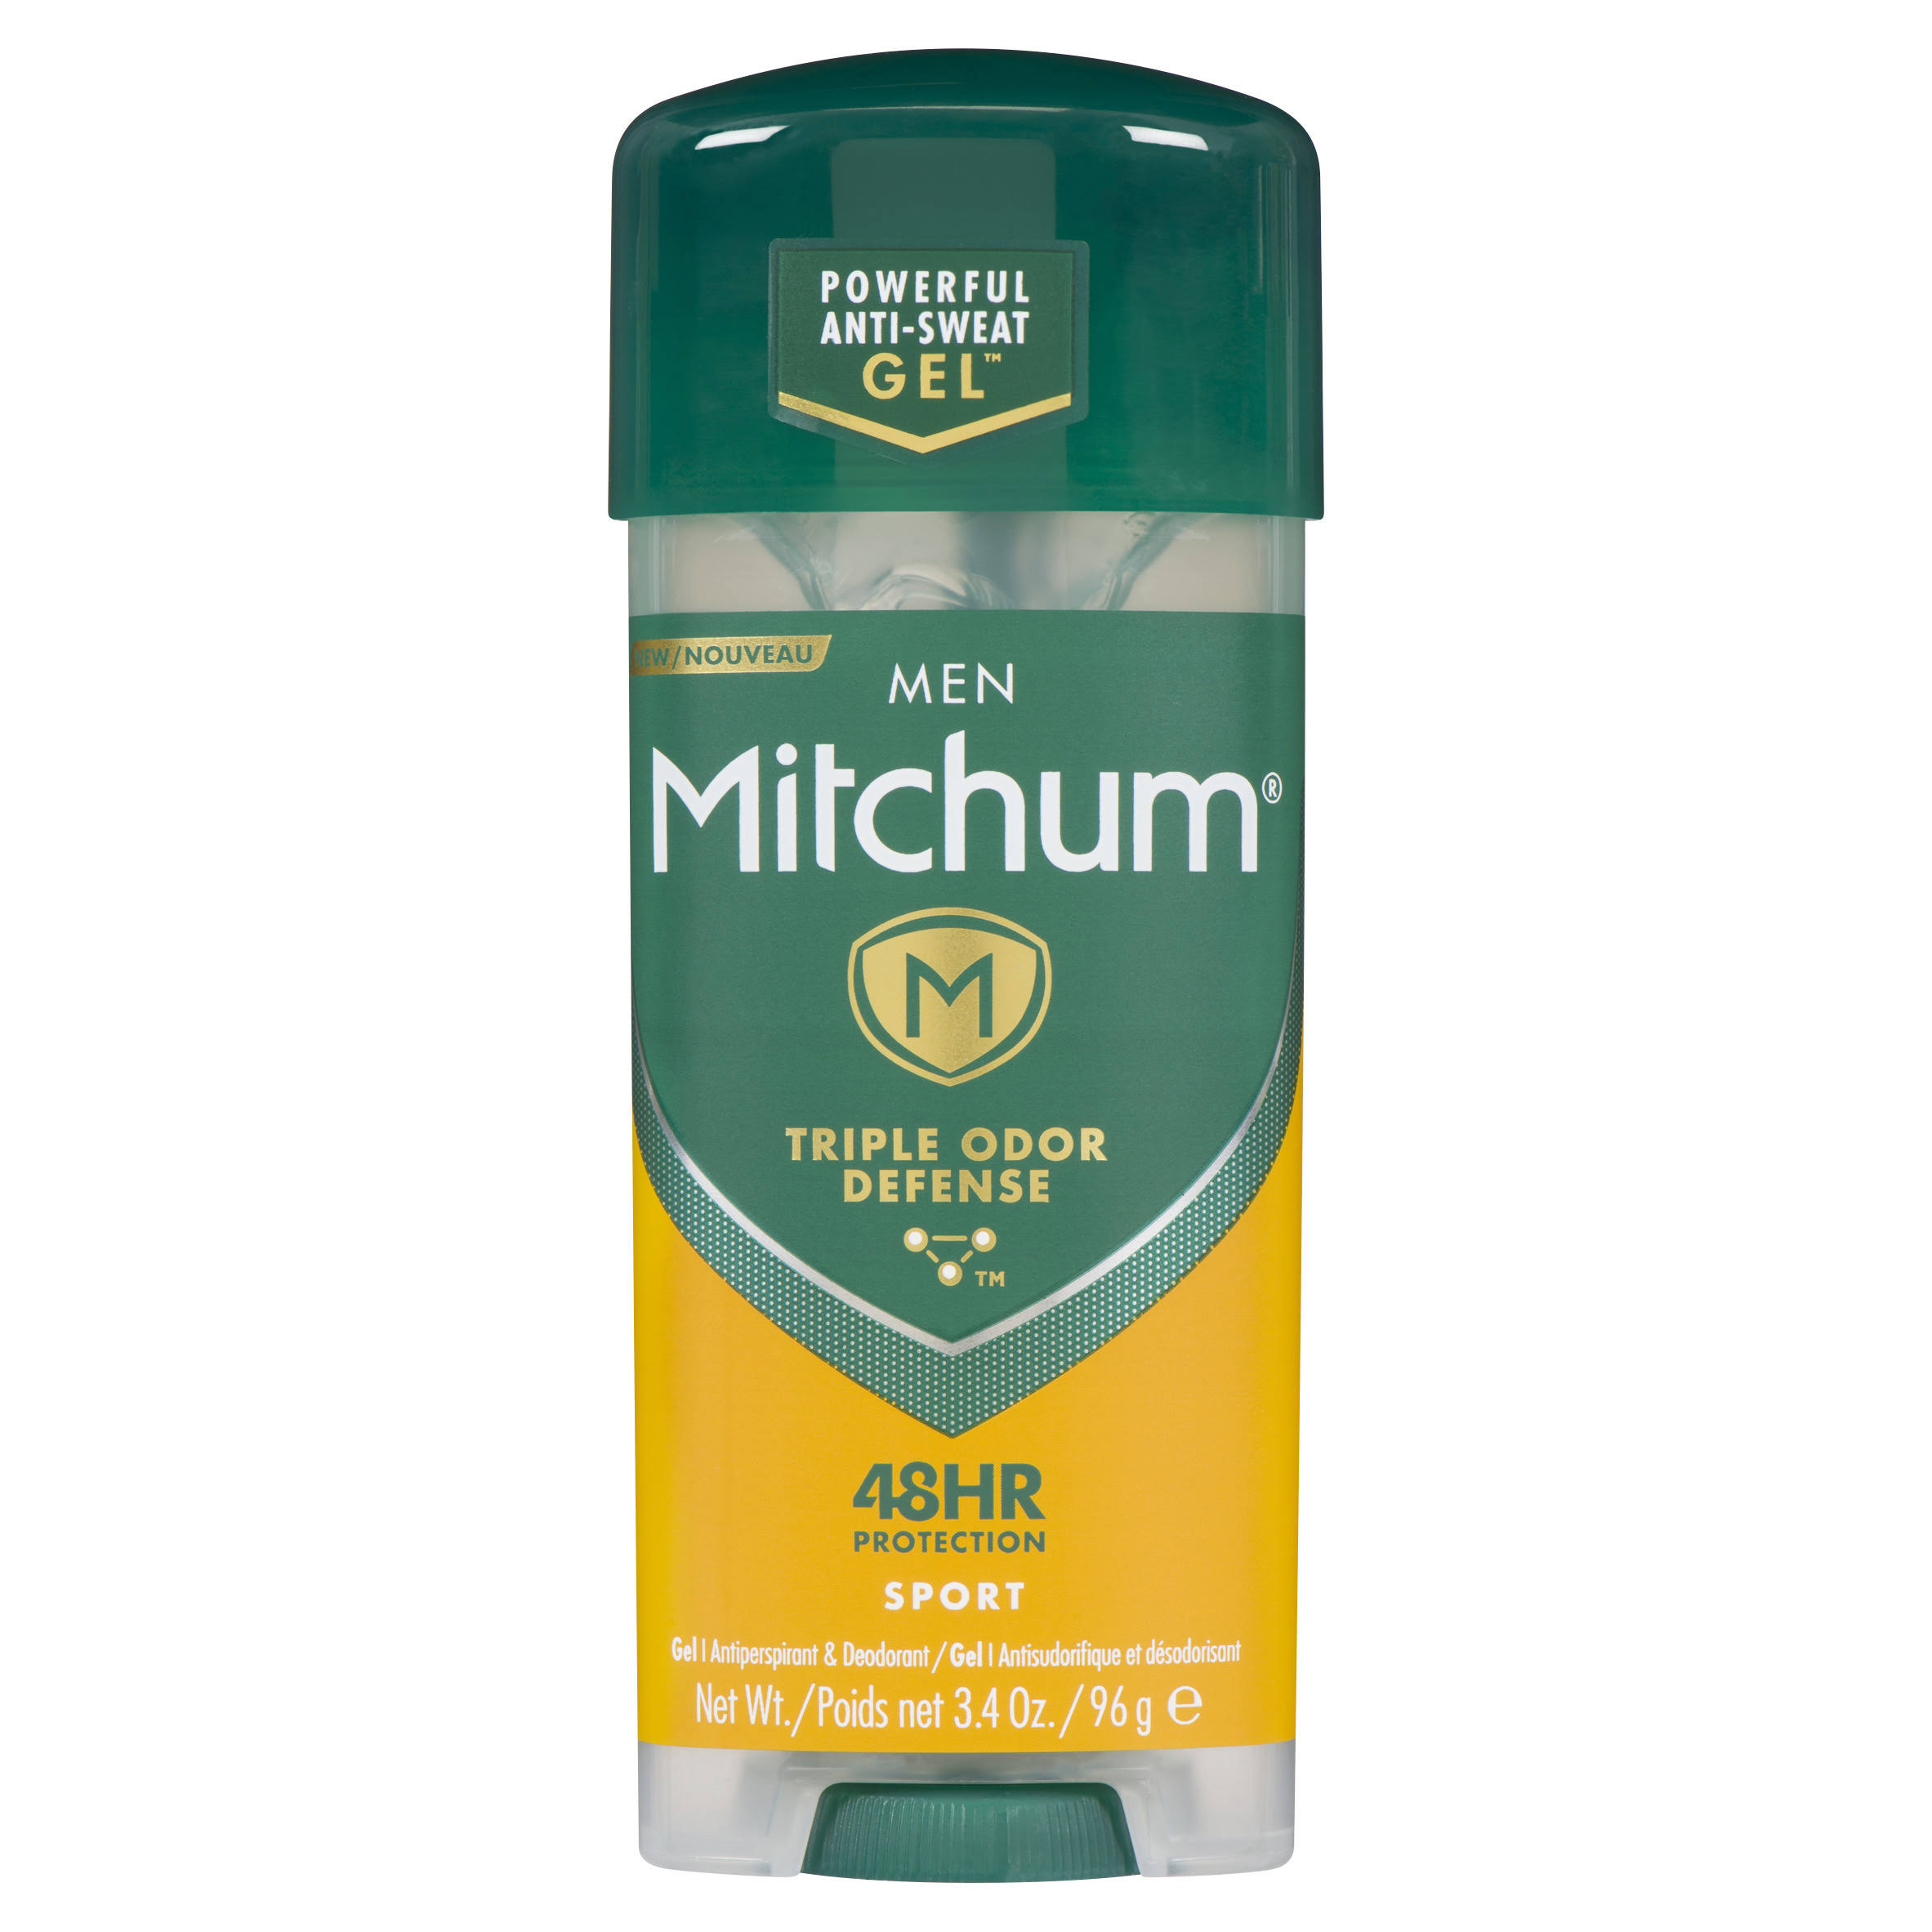 Mitchum Men Advanced Gel Anti-perspirant & Deodorant - Sport, 96g